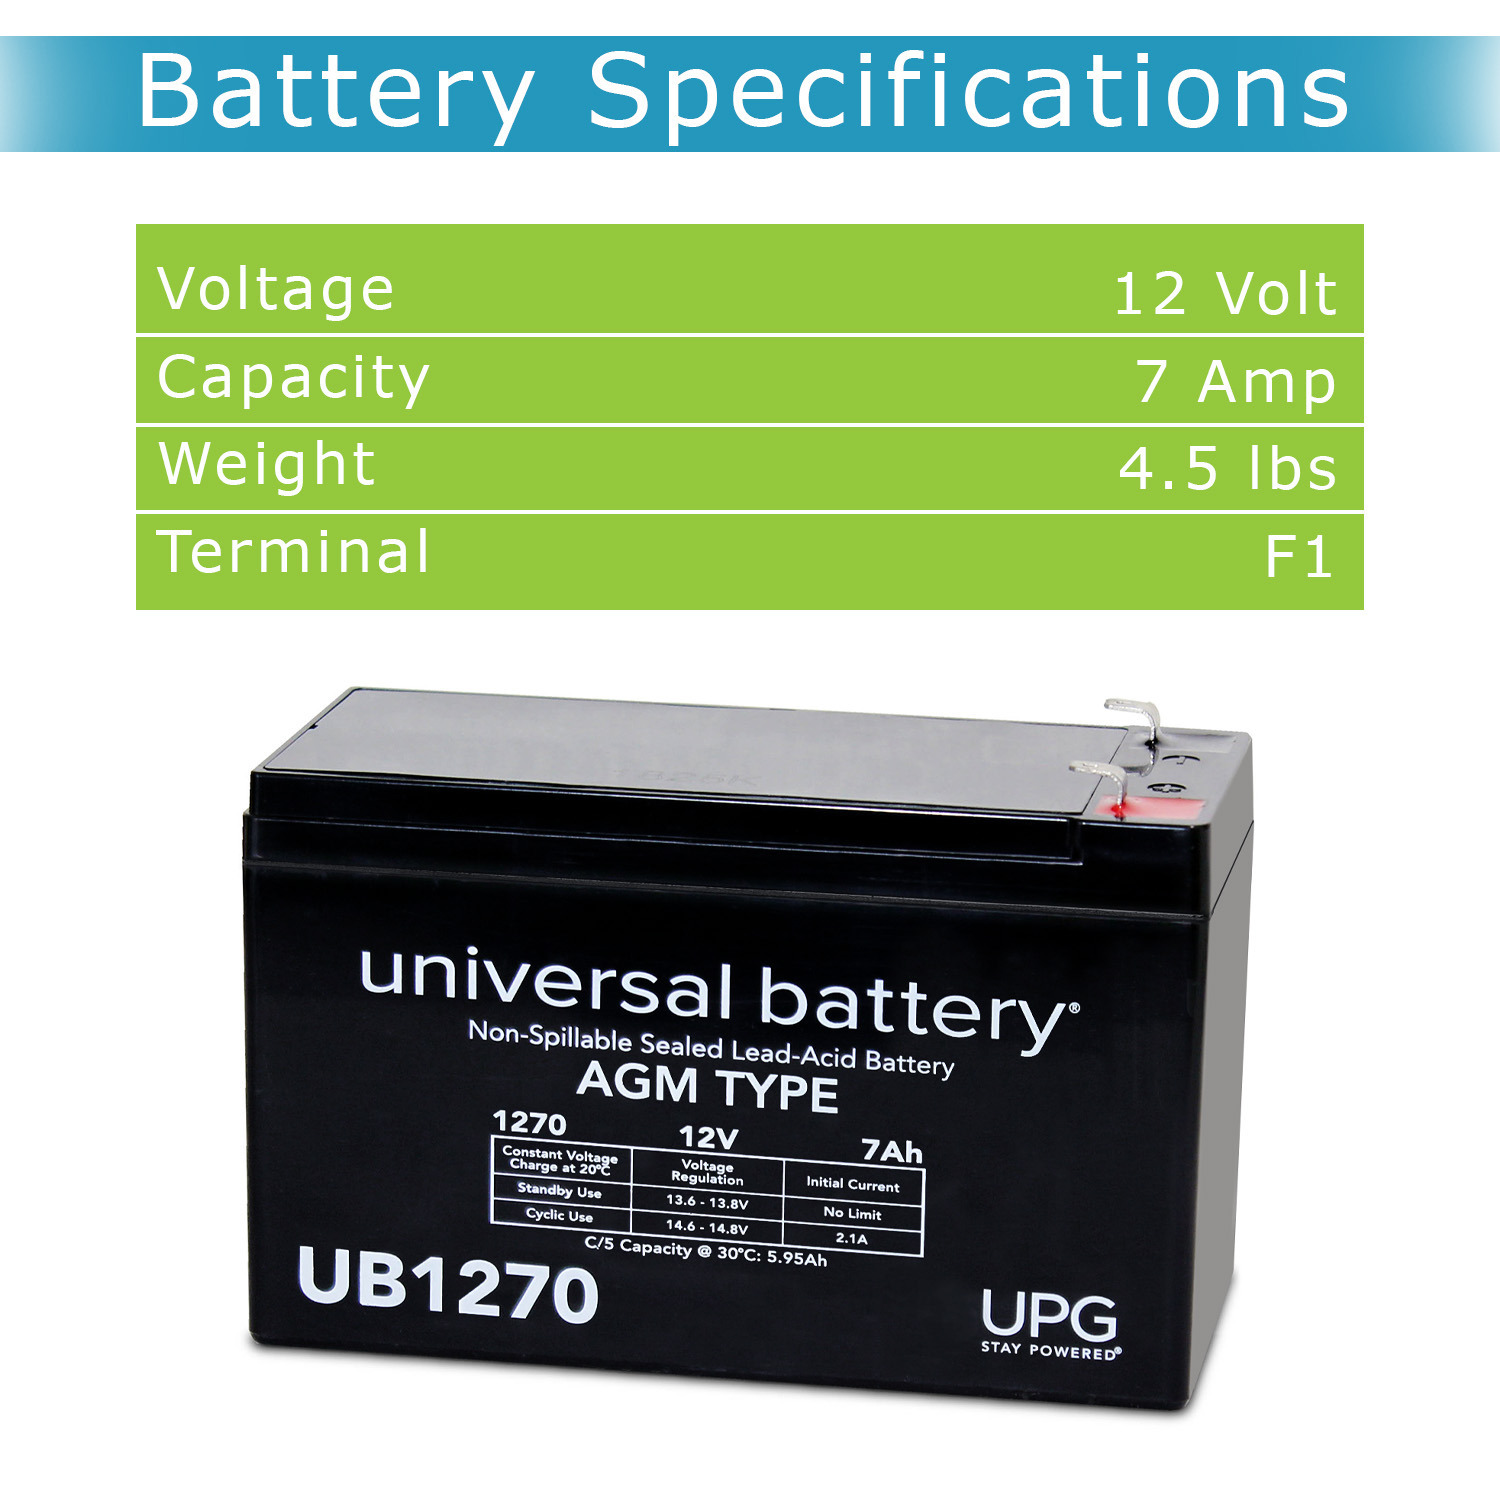 Universal Battery UB1270 Replacement Rhino Battery - image 3 of 6